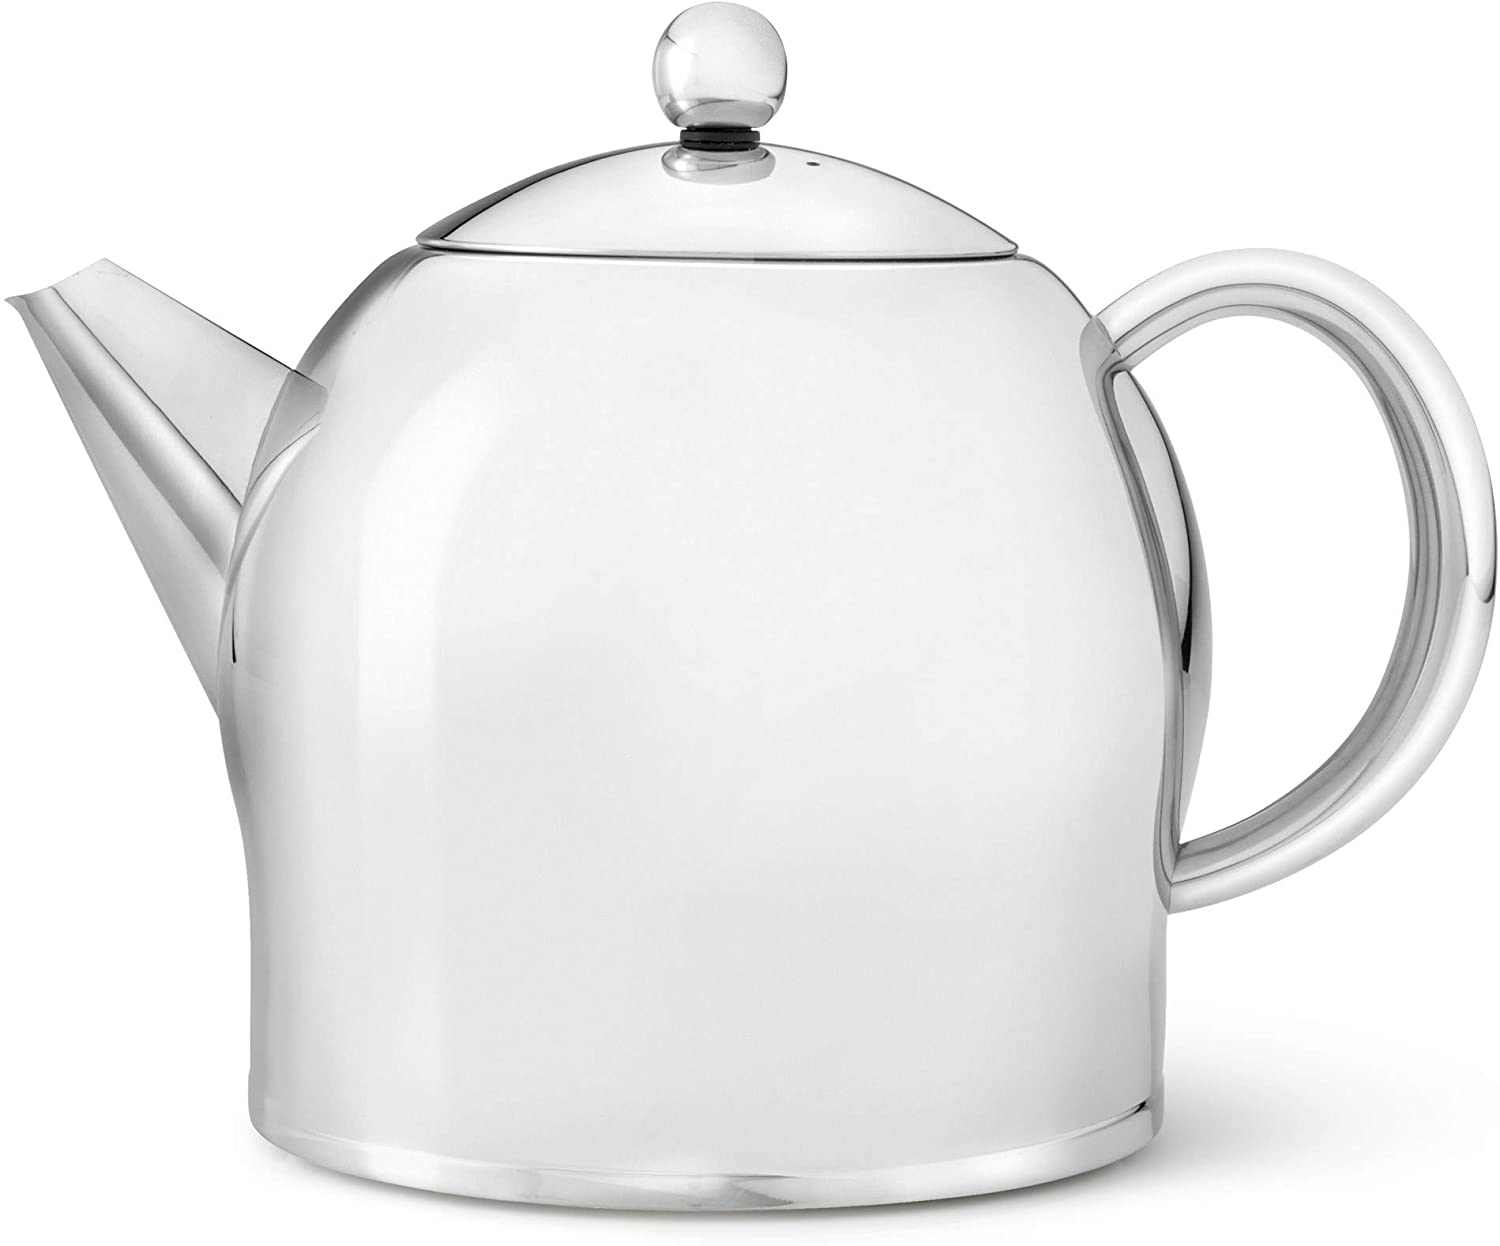 Bredemeijer 1.4 L Shiny Stainless Steel Santhee Teapot, Silver